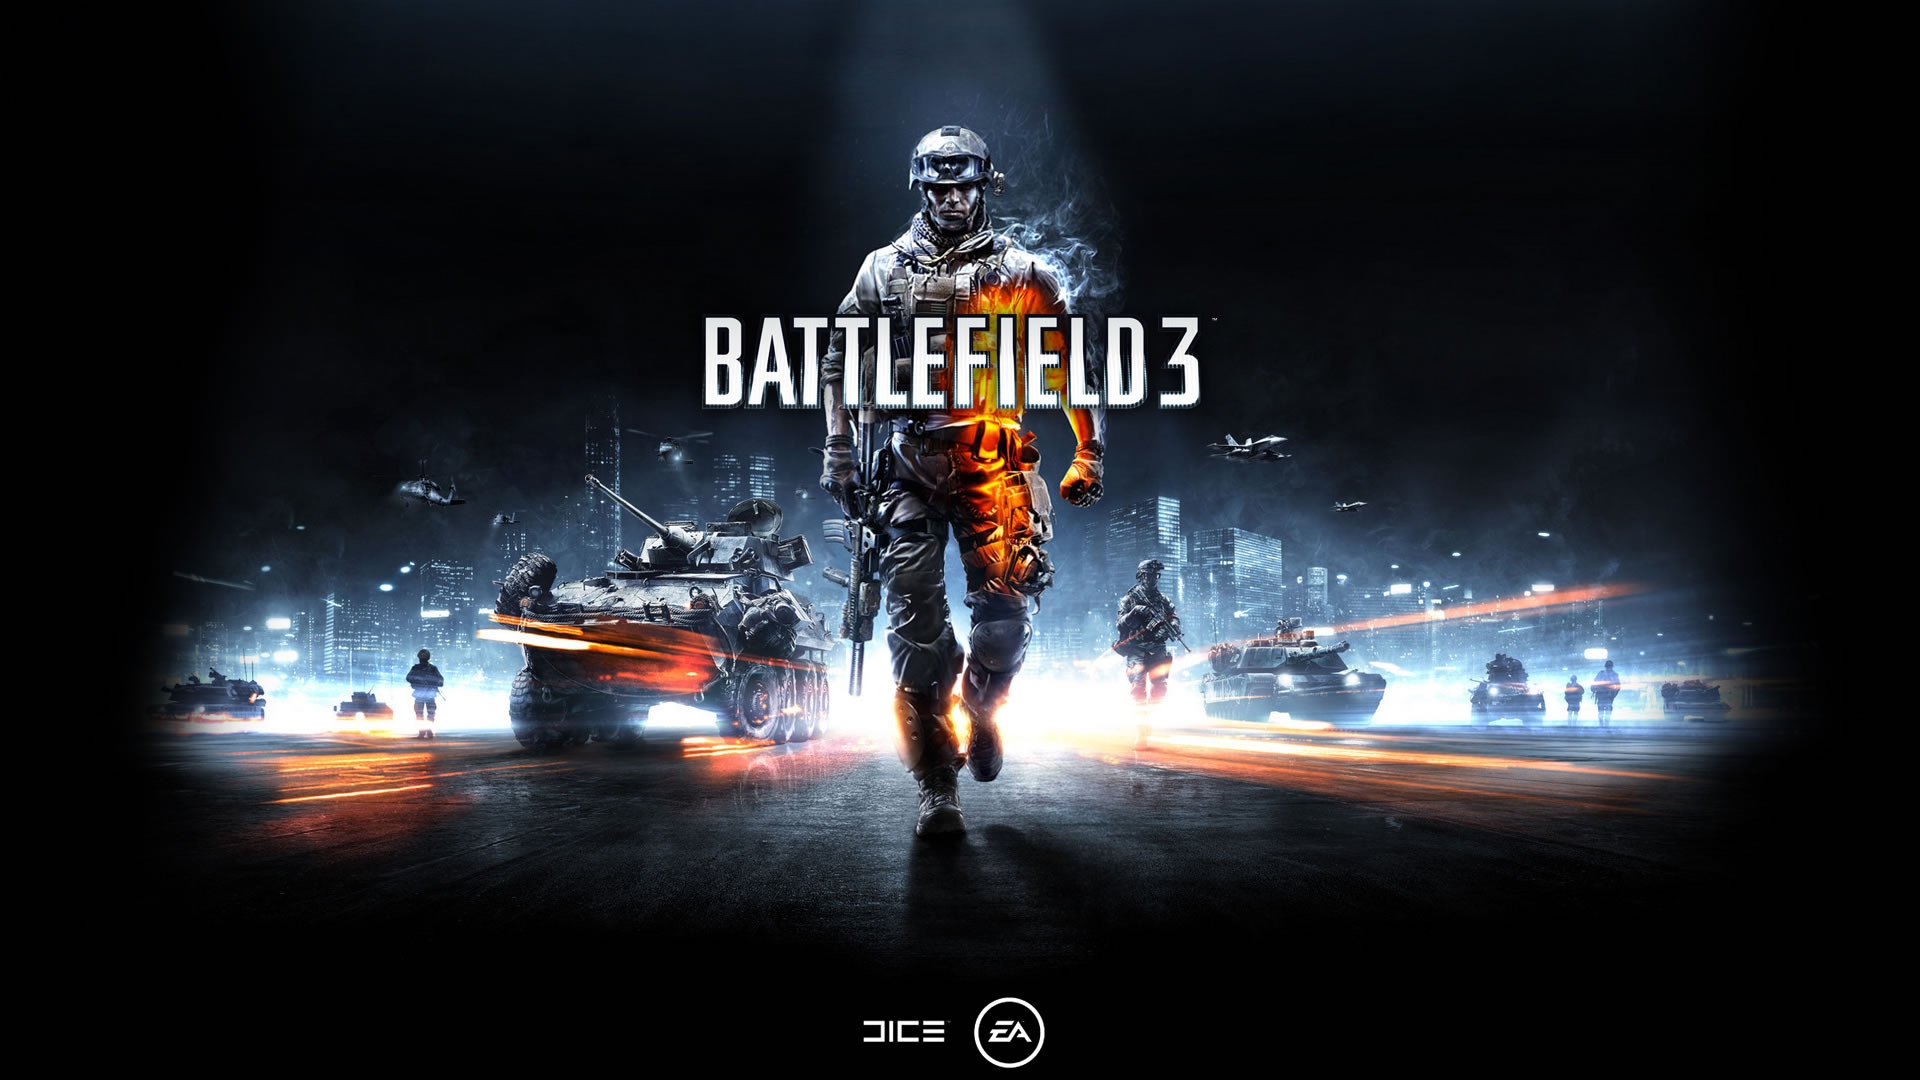 Battlefield 3 Game for 1920 x 1080 HDTV 1080p resolution